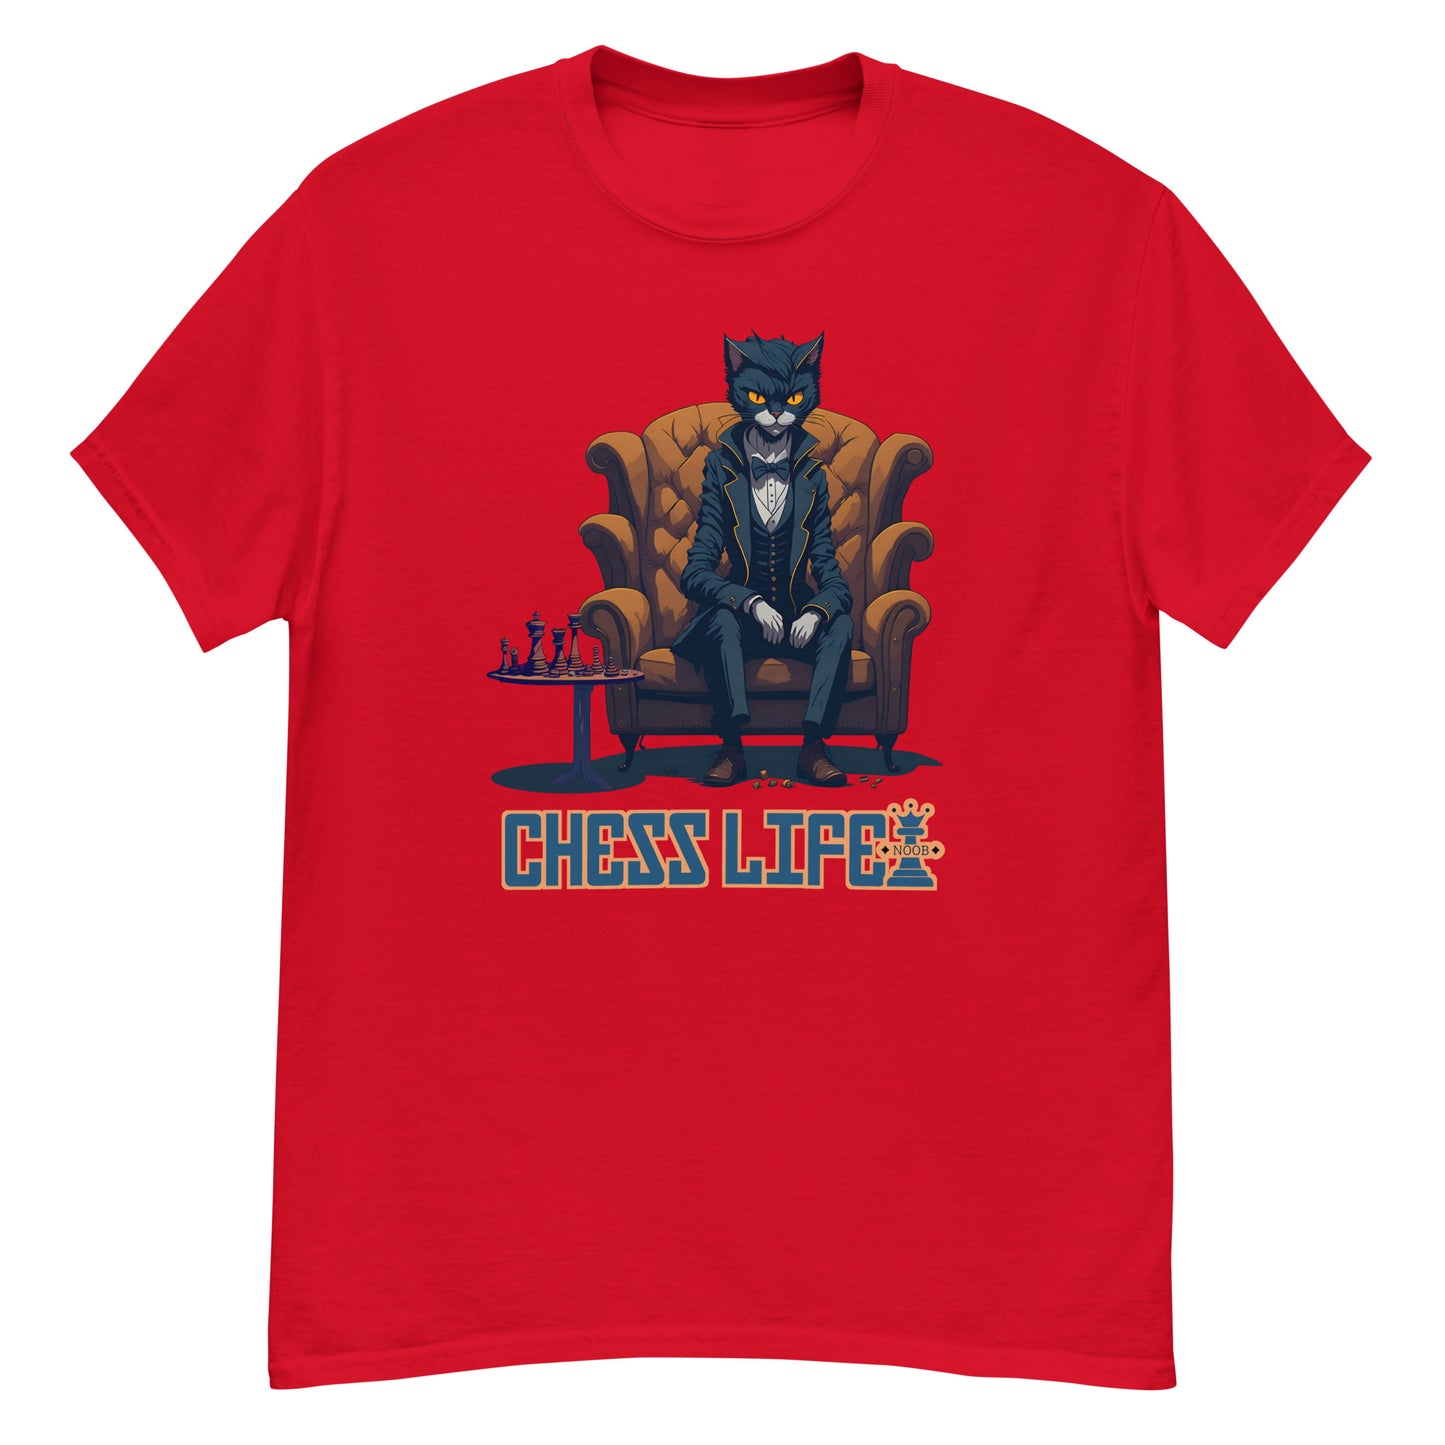 Chess Life Gentleman Cat | Classic T-Shirt